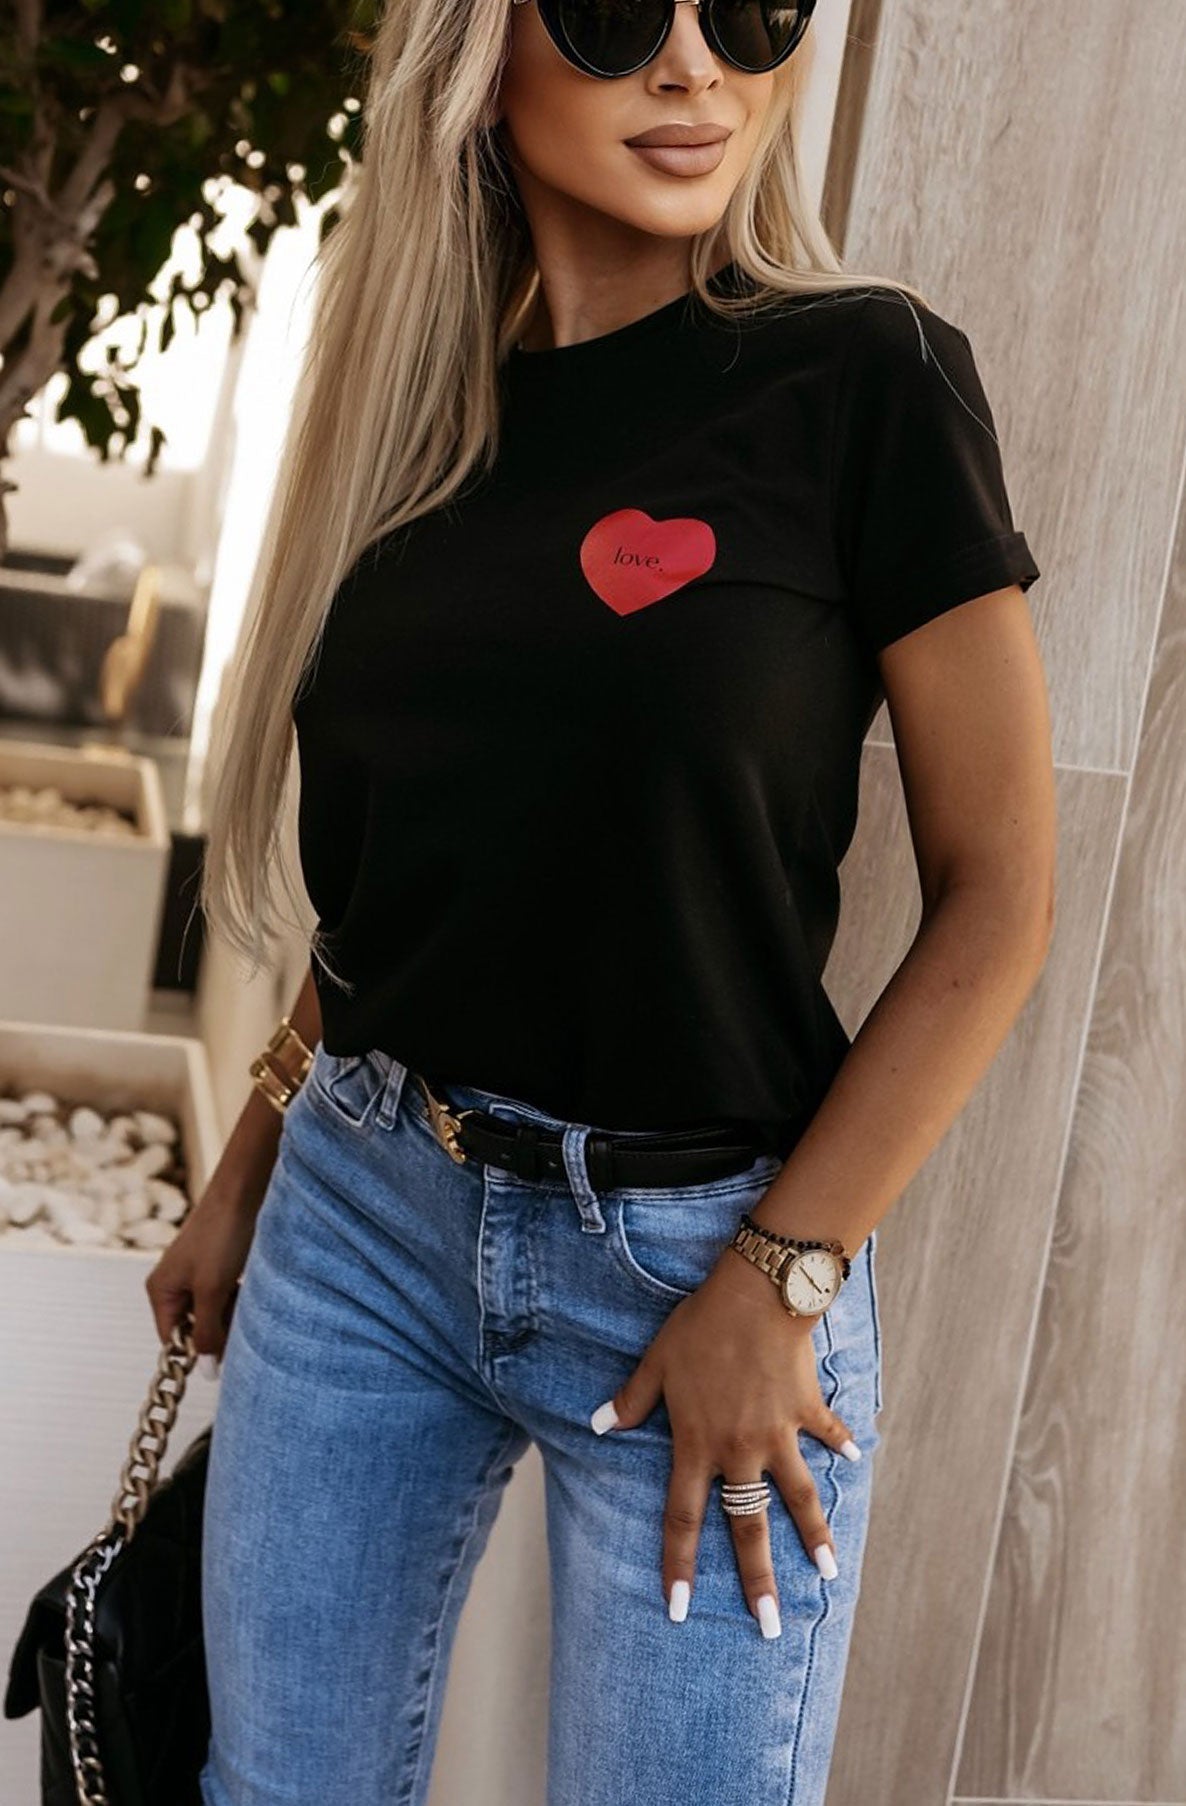 "Love" Heart Women's T-Shirt UK: Playful design, high-quality fabric for casual comfort.